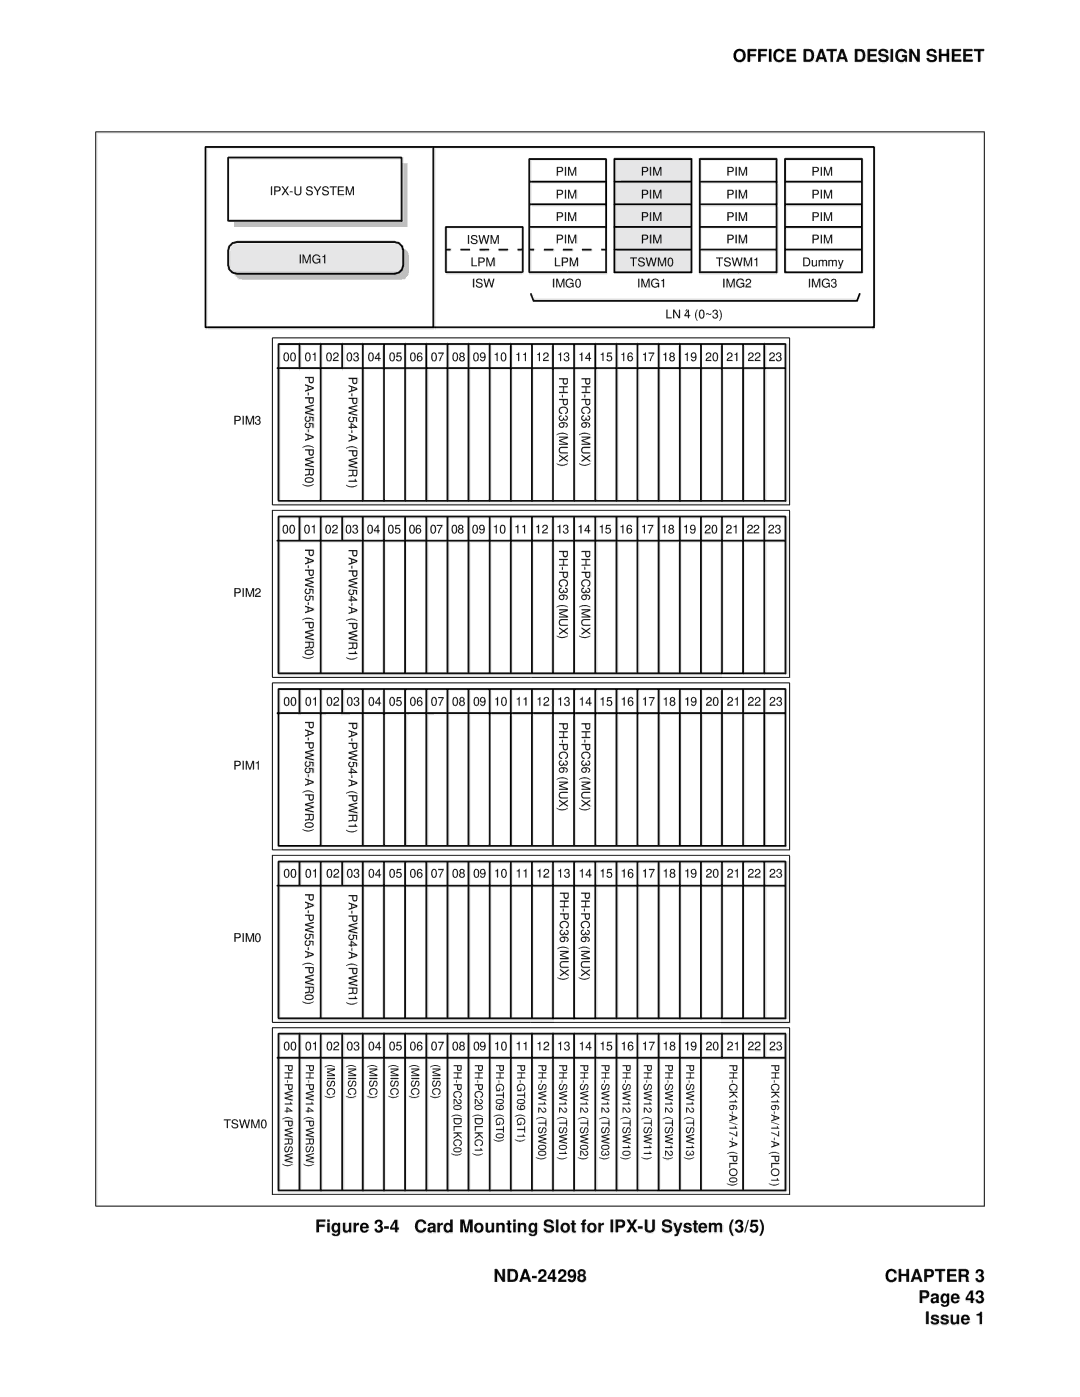 NEC NDA-24298 manual Card Mounting Slot for IPX-U System 3/5 